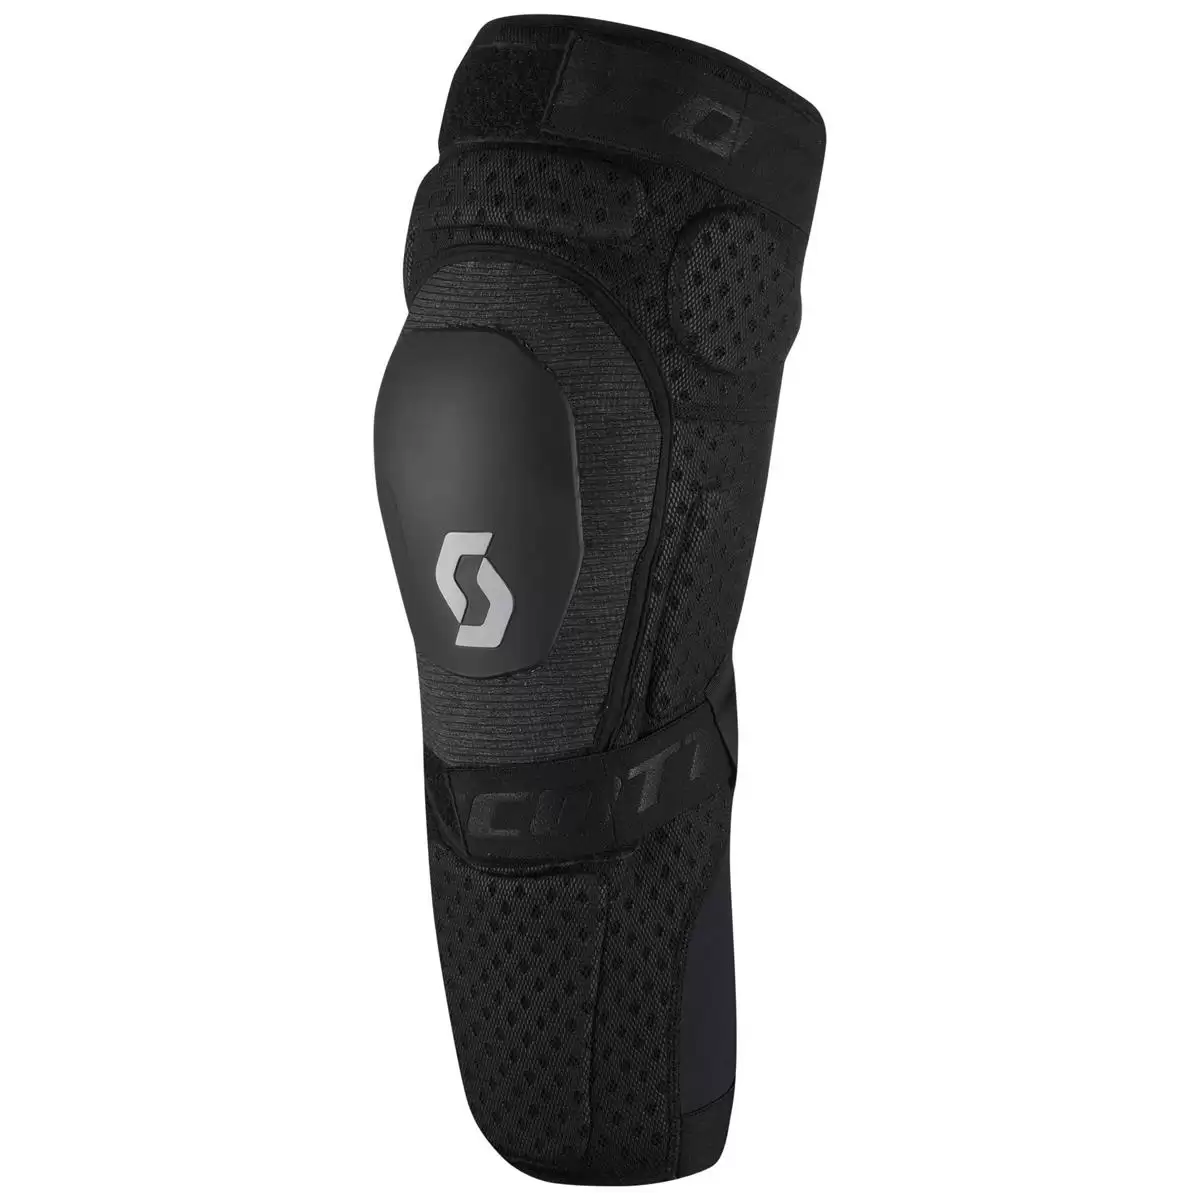 Knee Guard Softcon Hybrid Black - Size S - image